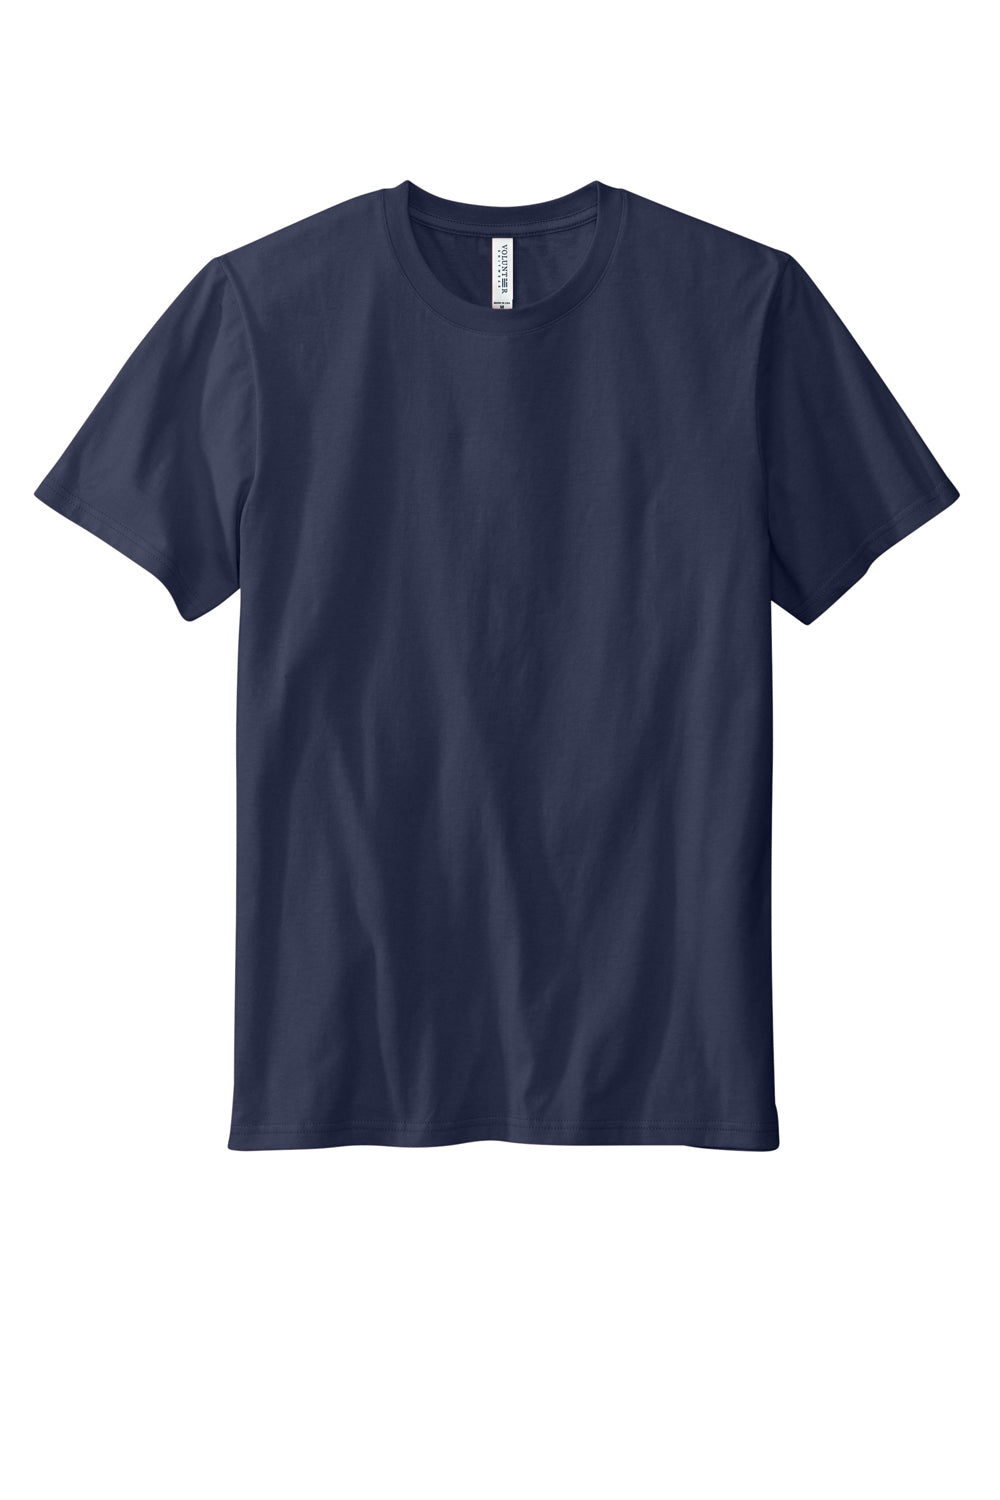 Volunteer Knitwear VL45 Daily Short Sleeve Crewneck T-Shirt Strong Navy Blue Flat Front